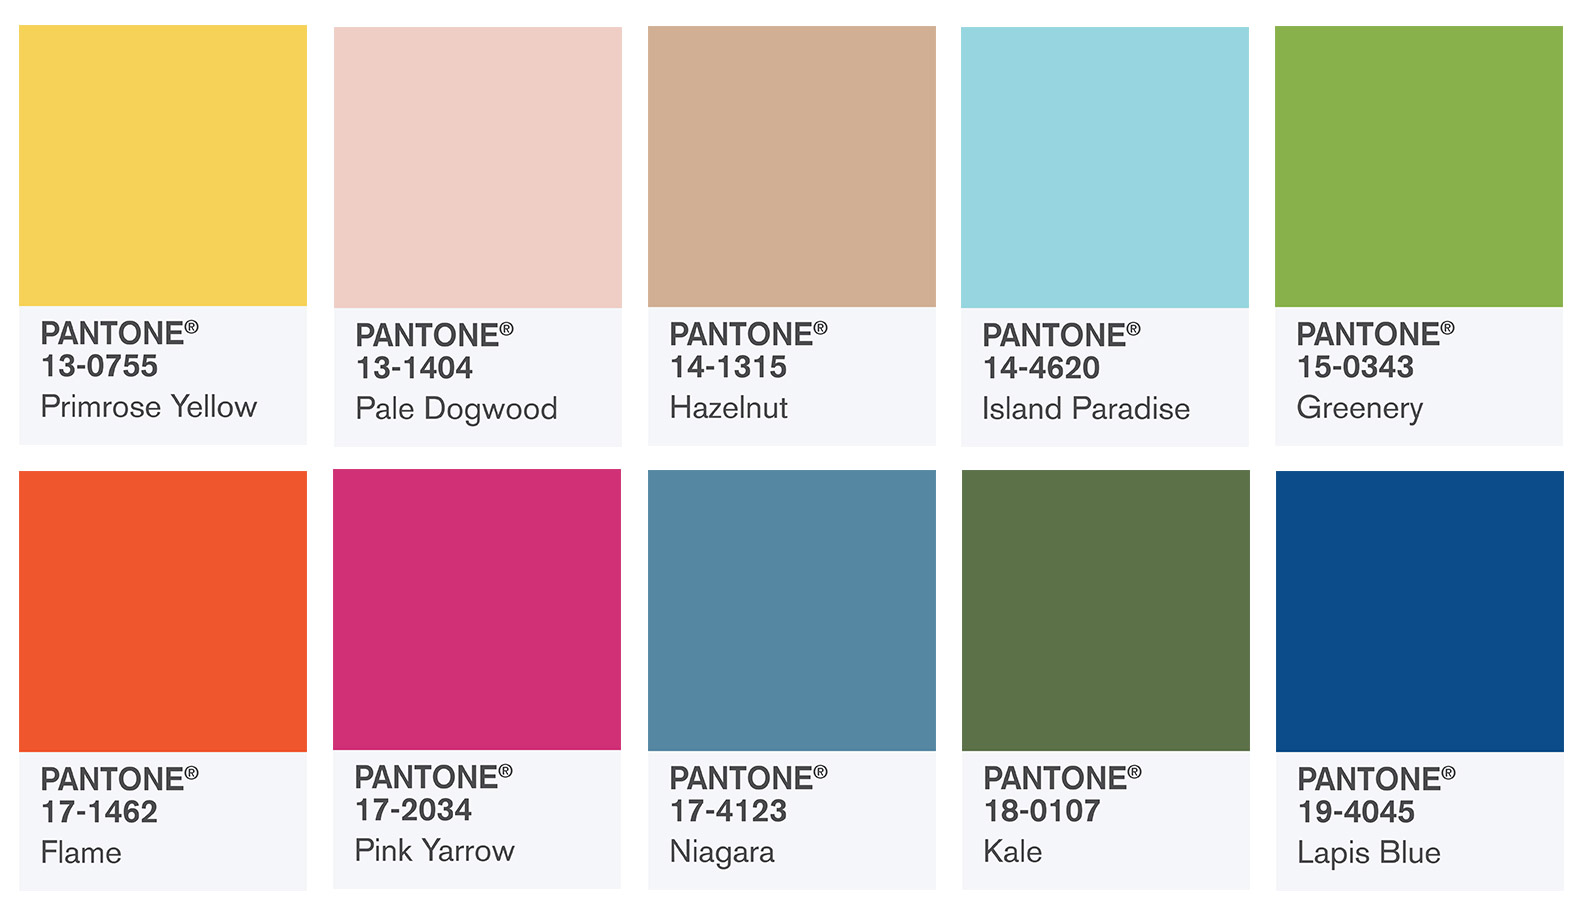 Pantone Spring 2017 Color Report